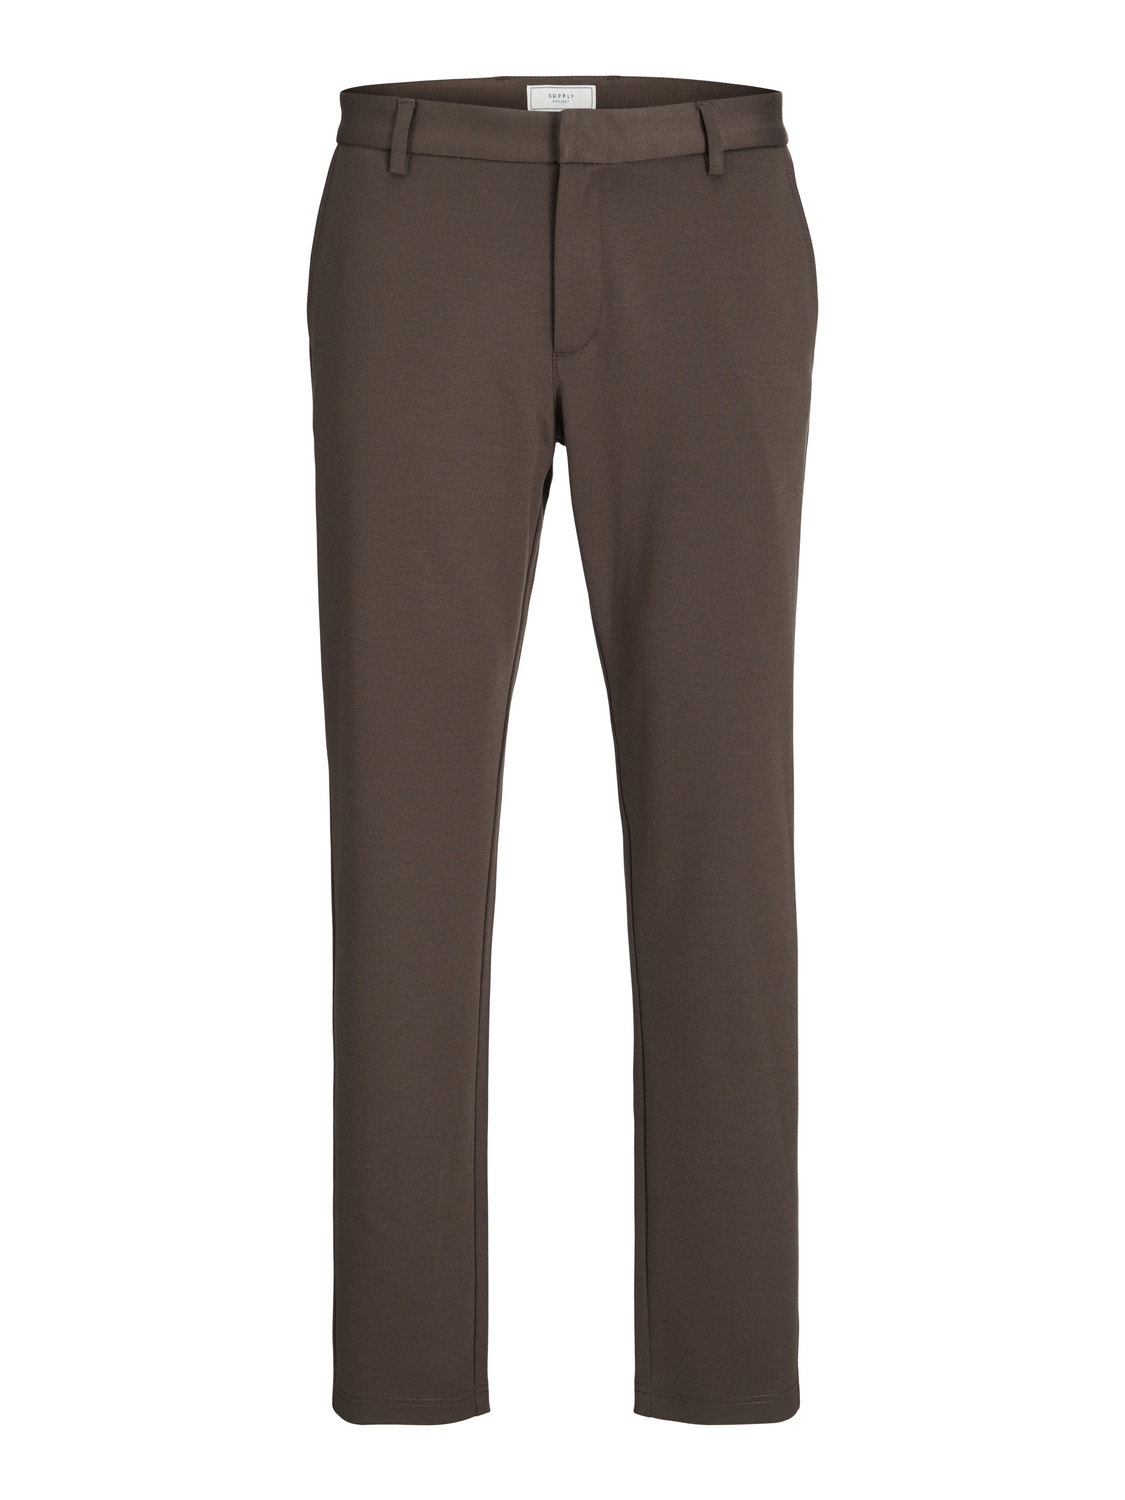 Jack & Jones Slim Fit Chino trousers -Chocolate Brown - 12252350